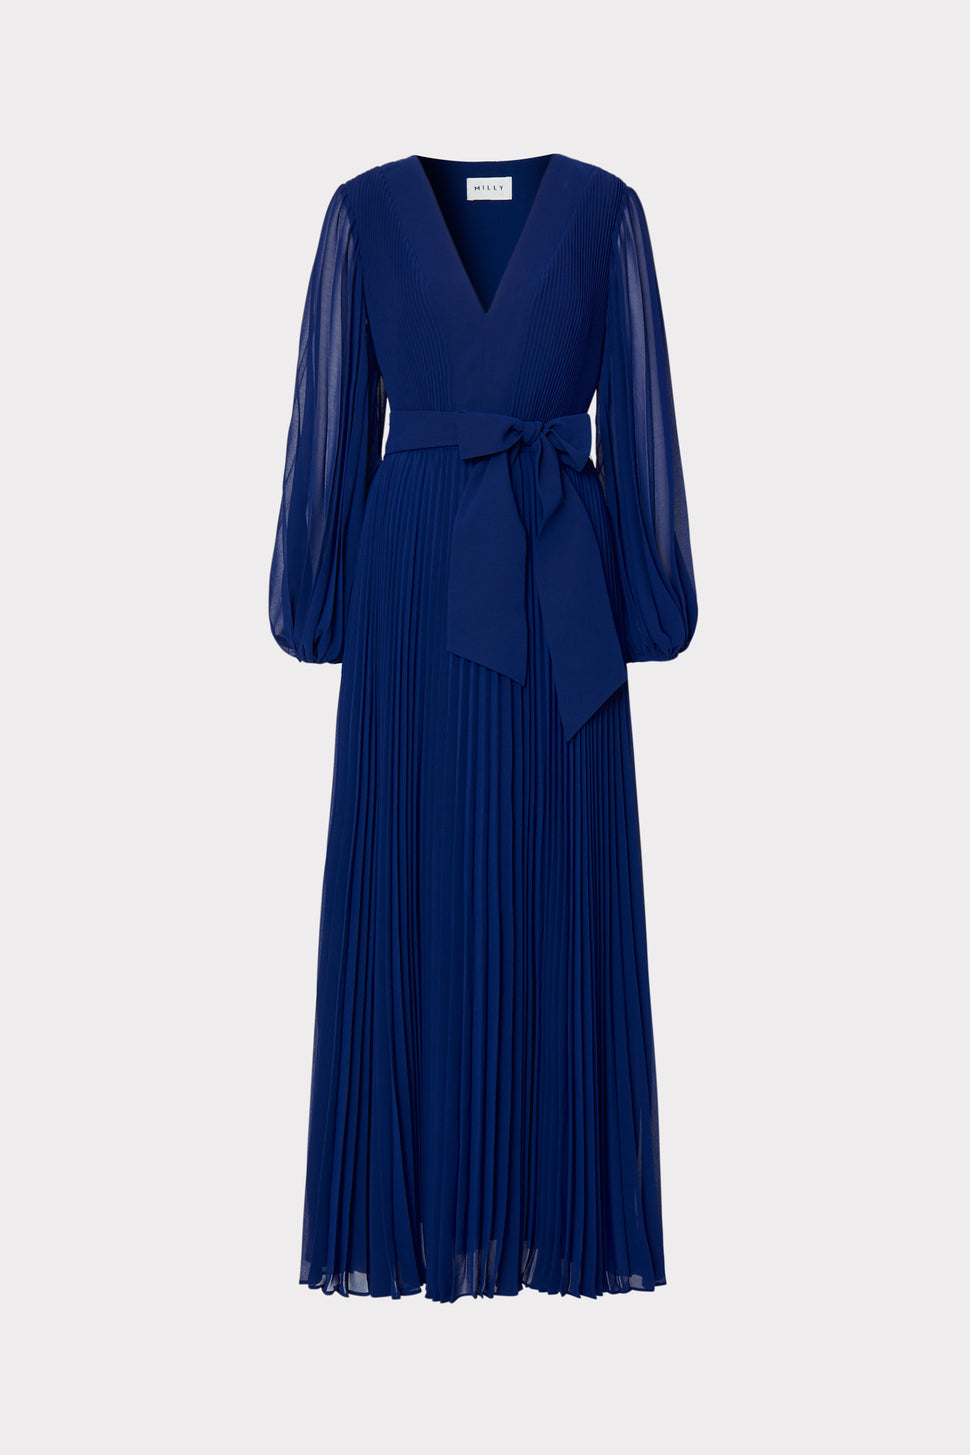 Milly for Kohls DesignNation  Maxi dress, Top design fashion, Fashion